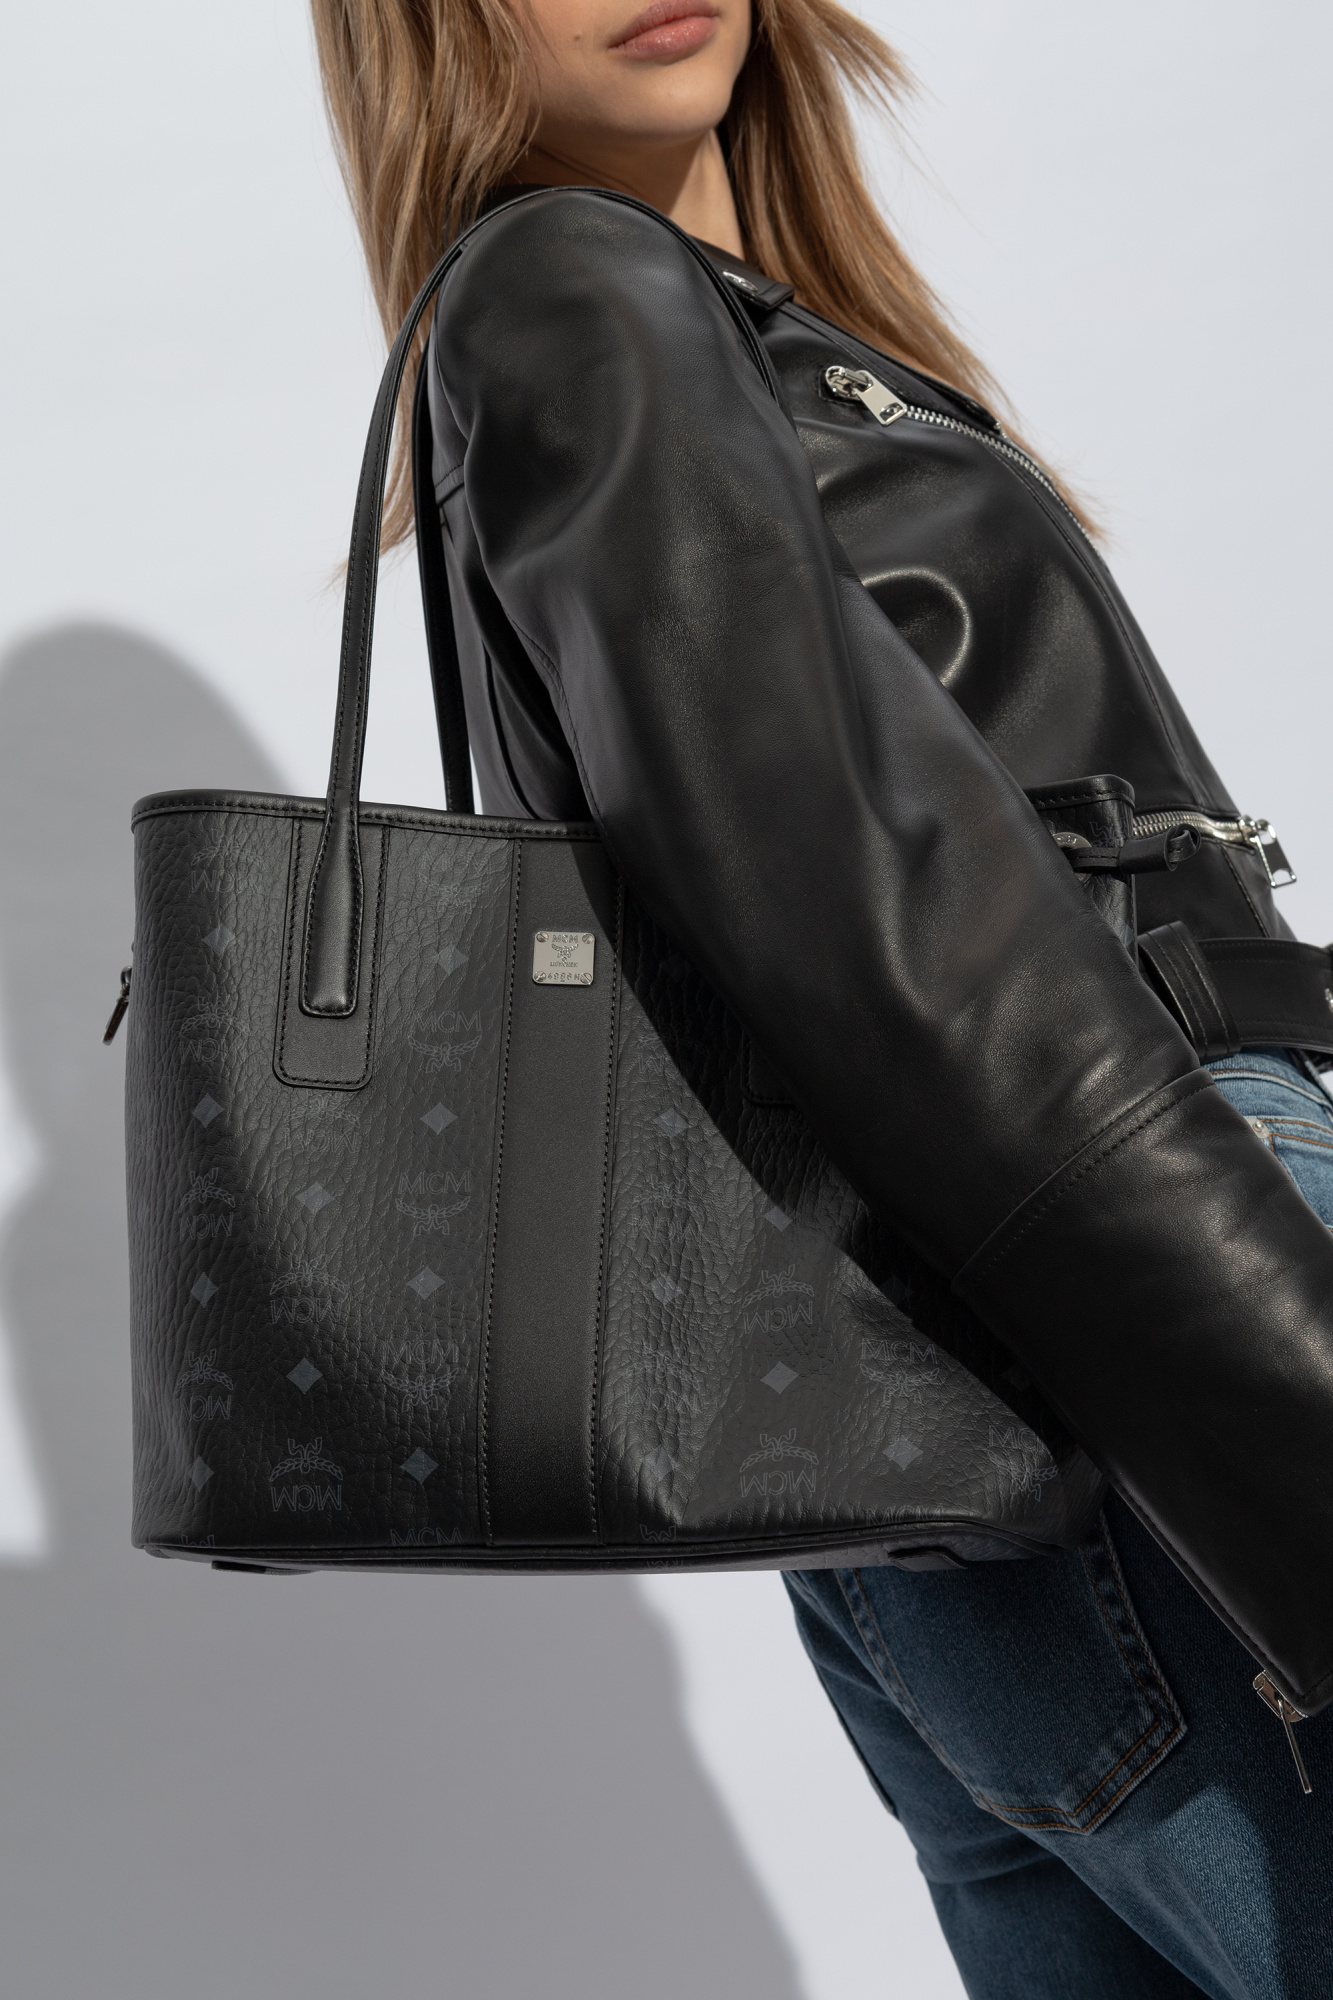 Black 'Liz Small' reversible shopper bag MCM - Vitkac TW